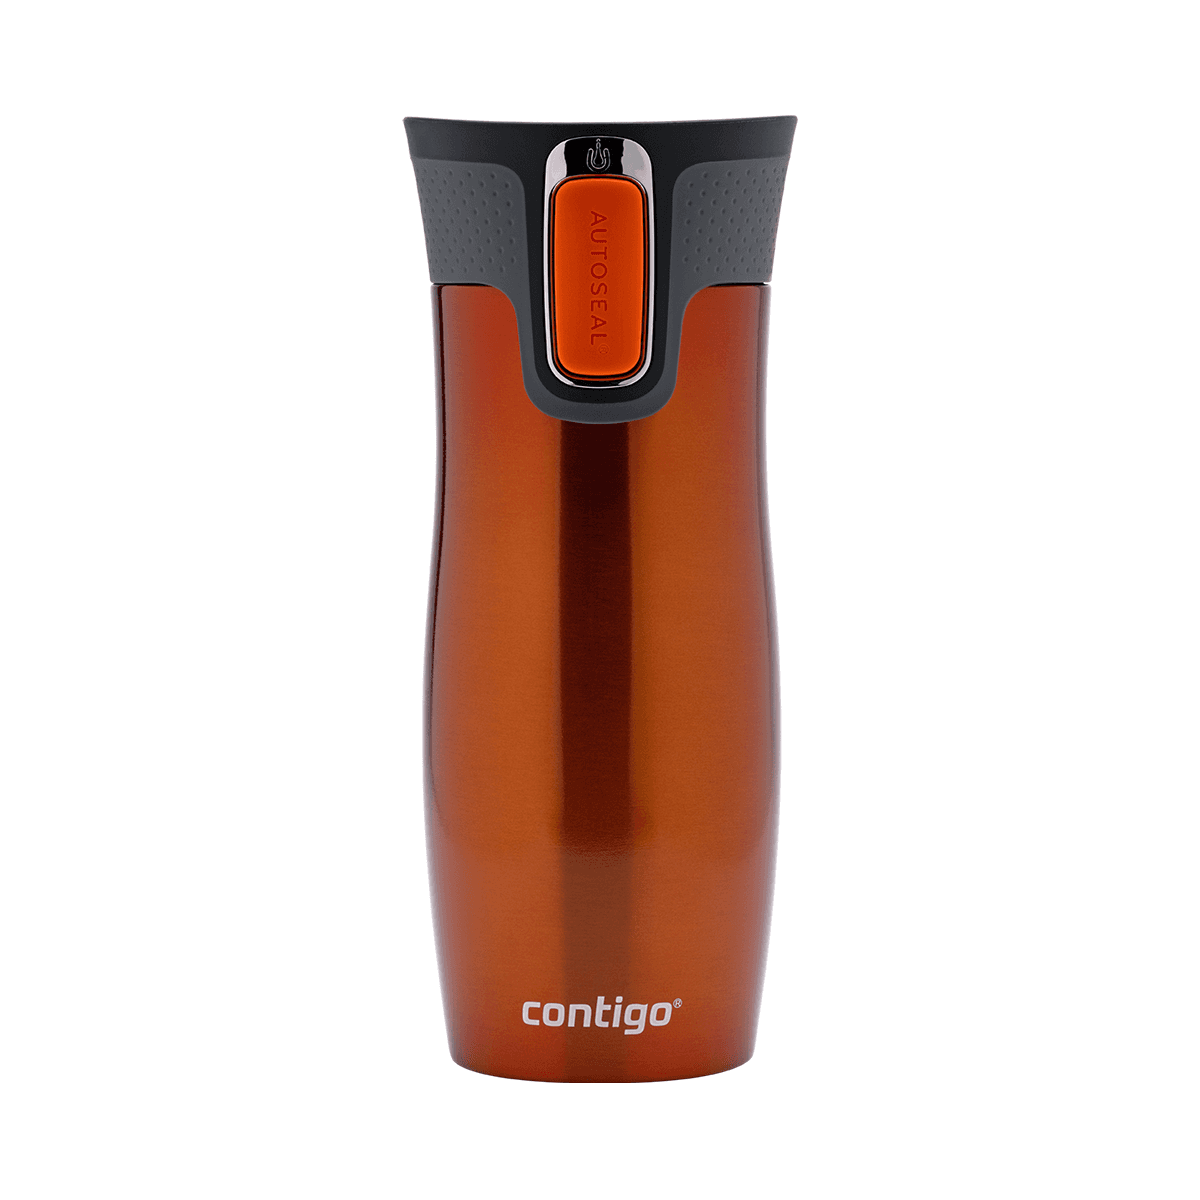 Contigo Tangerine Autoseal West Loop Vacuum Insulated Stainless Steel Travel Mug 470 ml